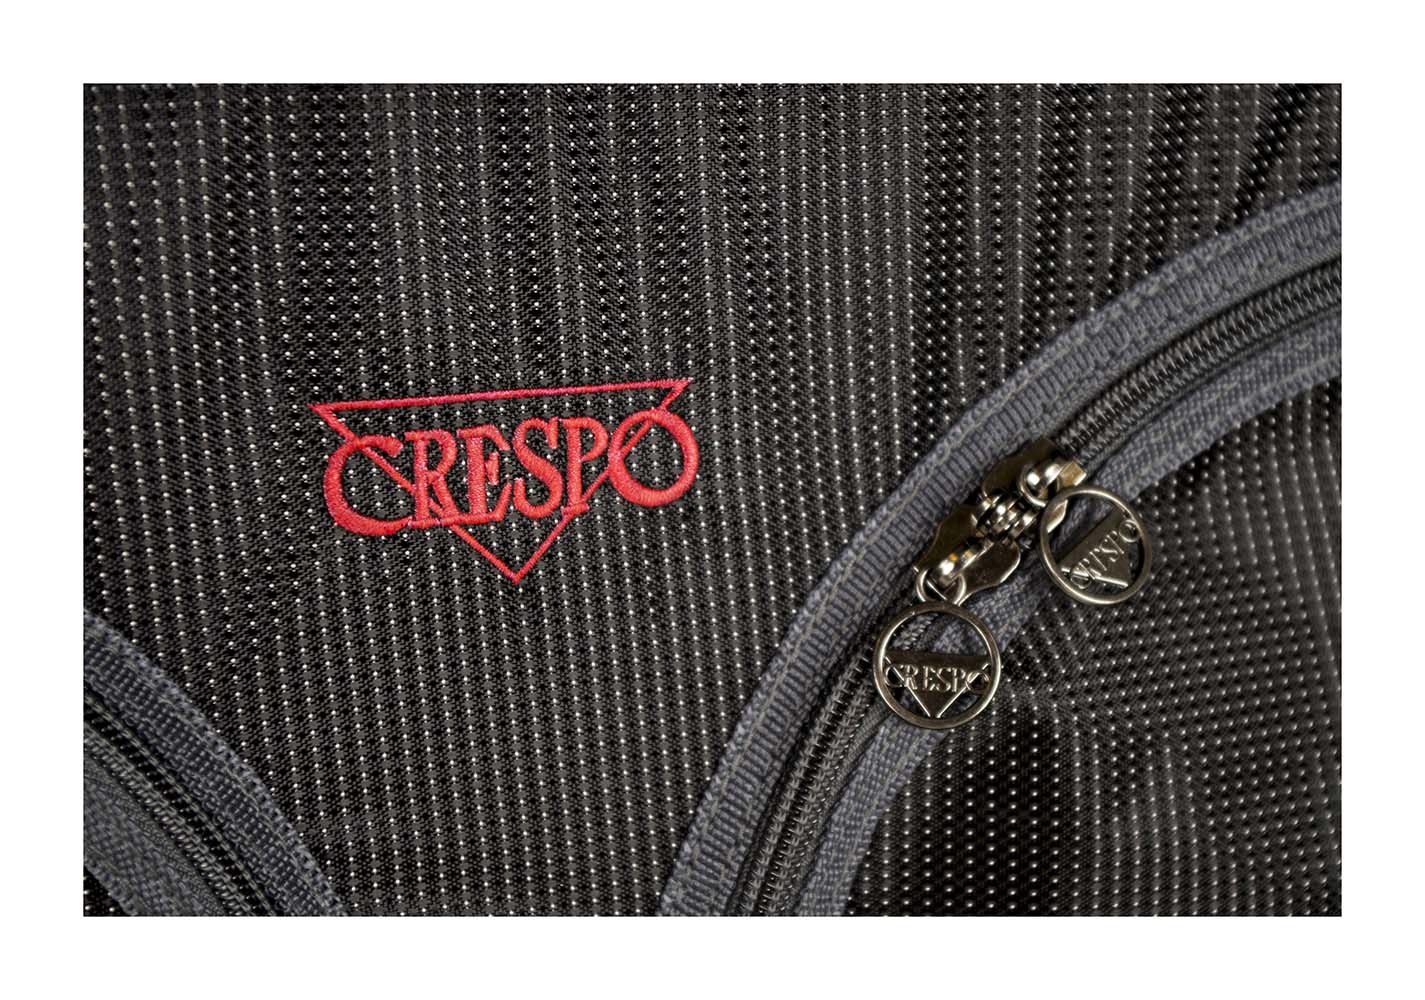 Crespo - Kookkast - AP/105 detail 6